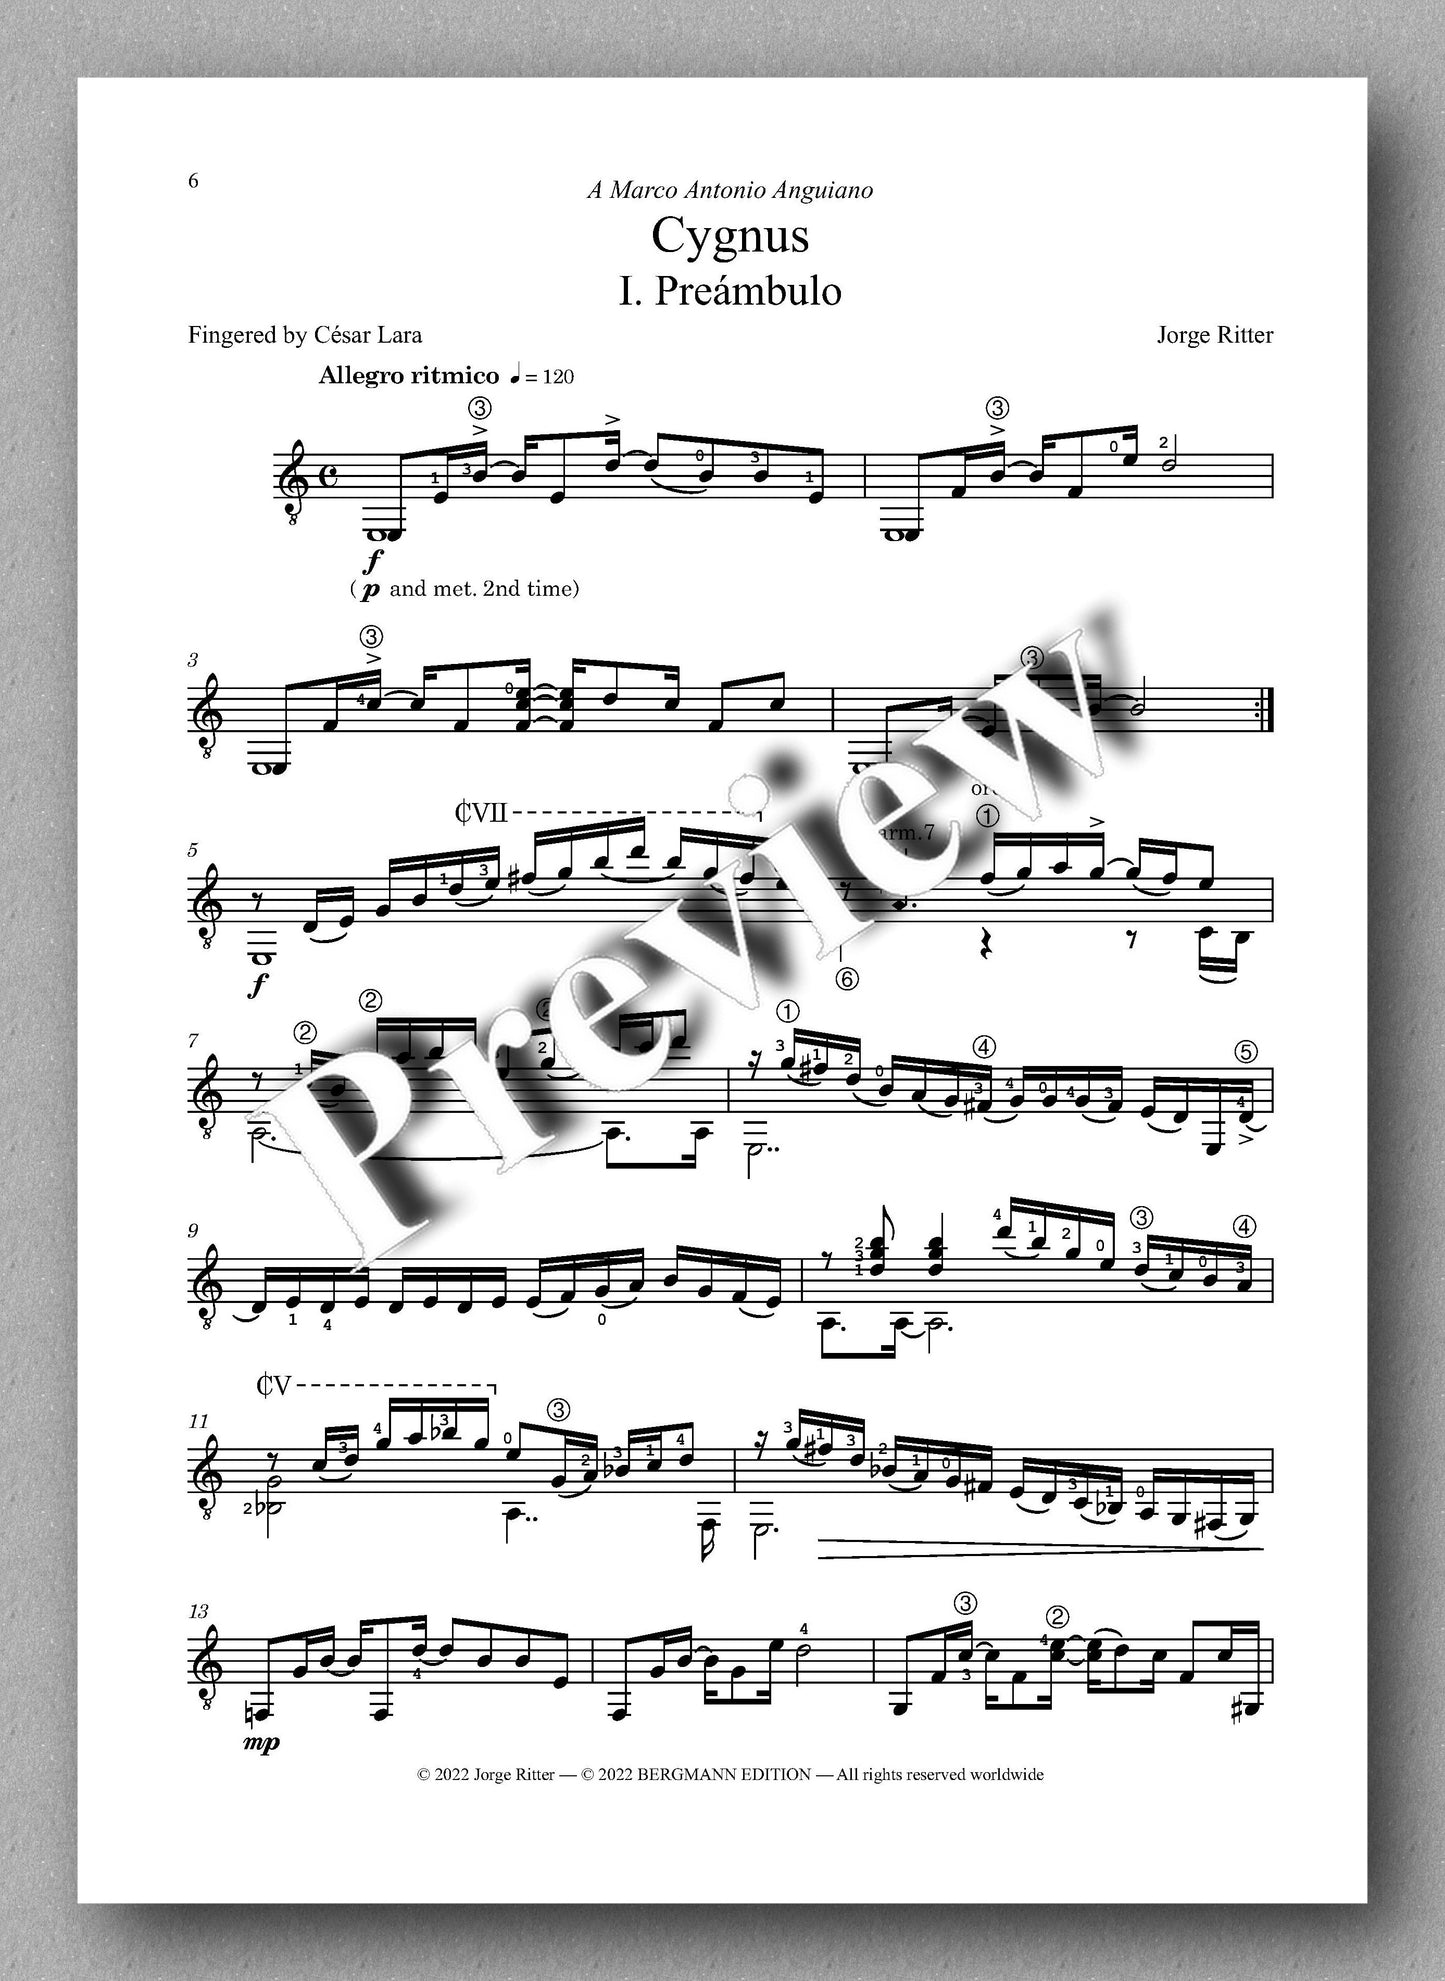 Jorge Ritter, Cygnus - music score 1